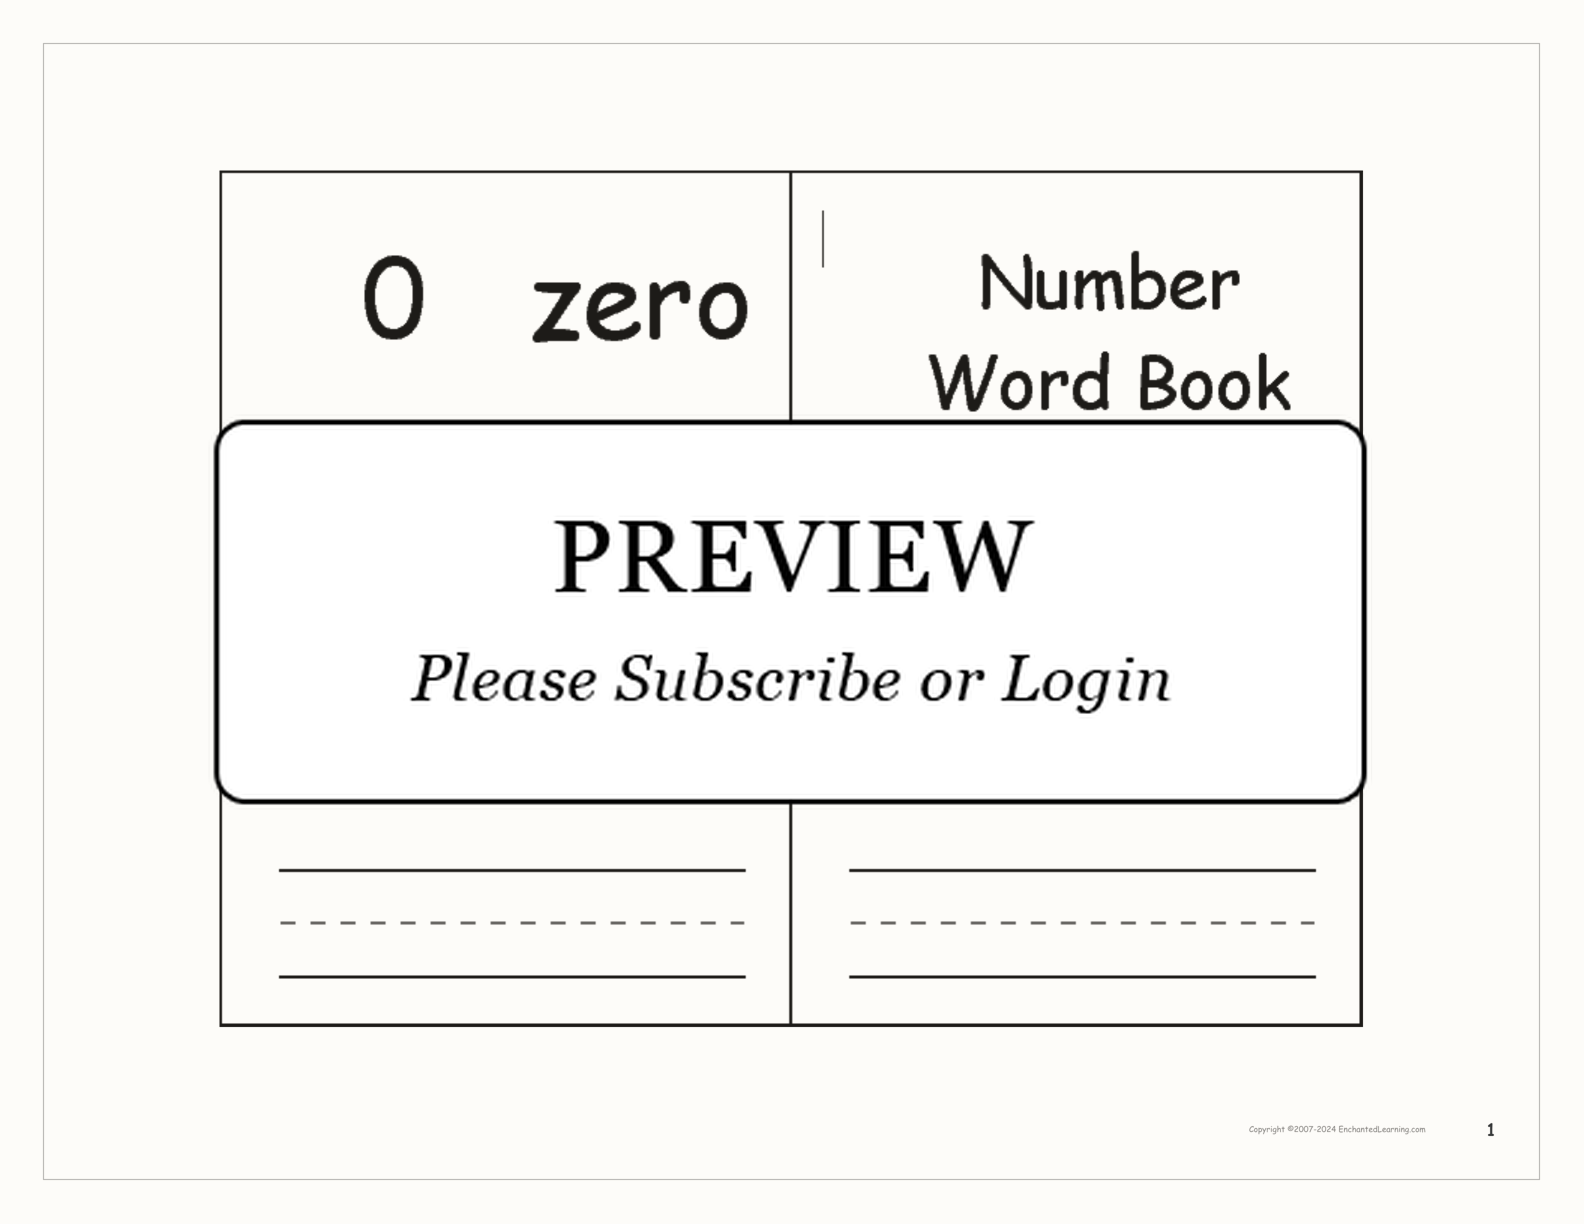 Numbers Word Book interactive worksheet page 1